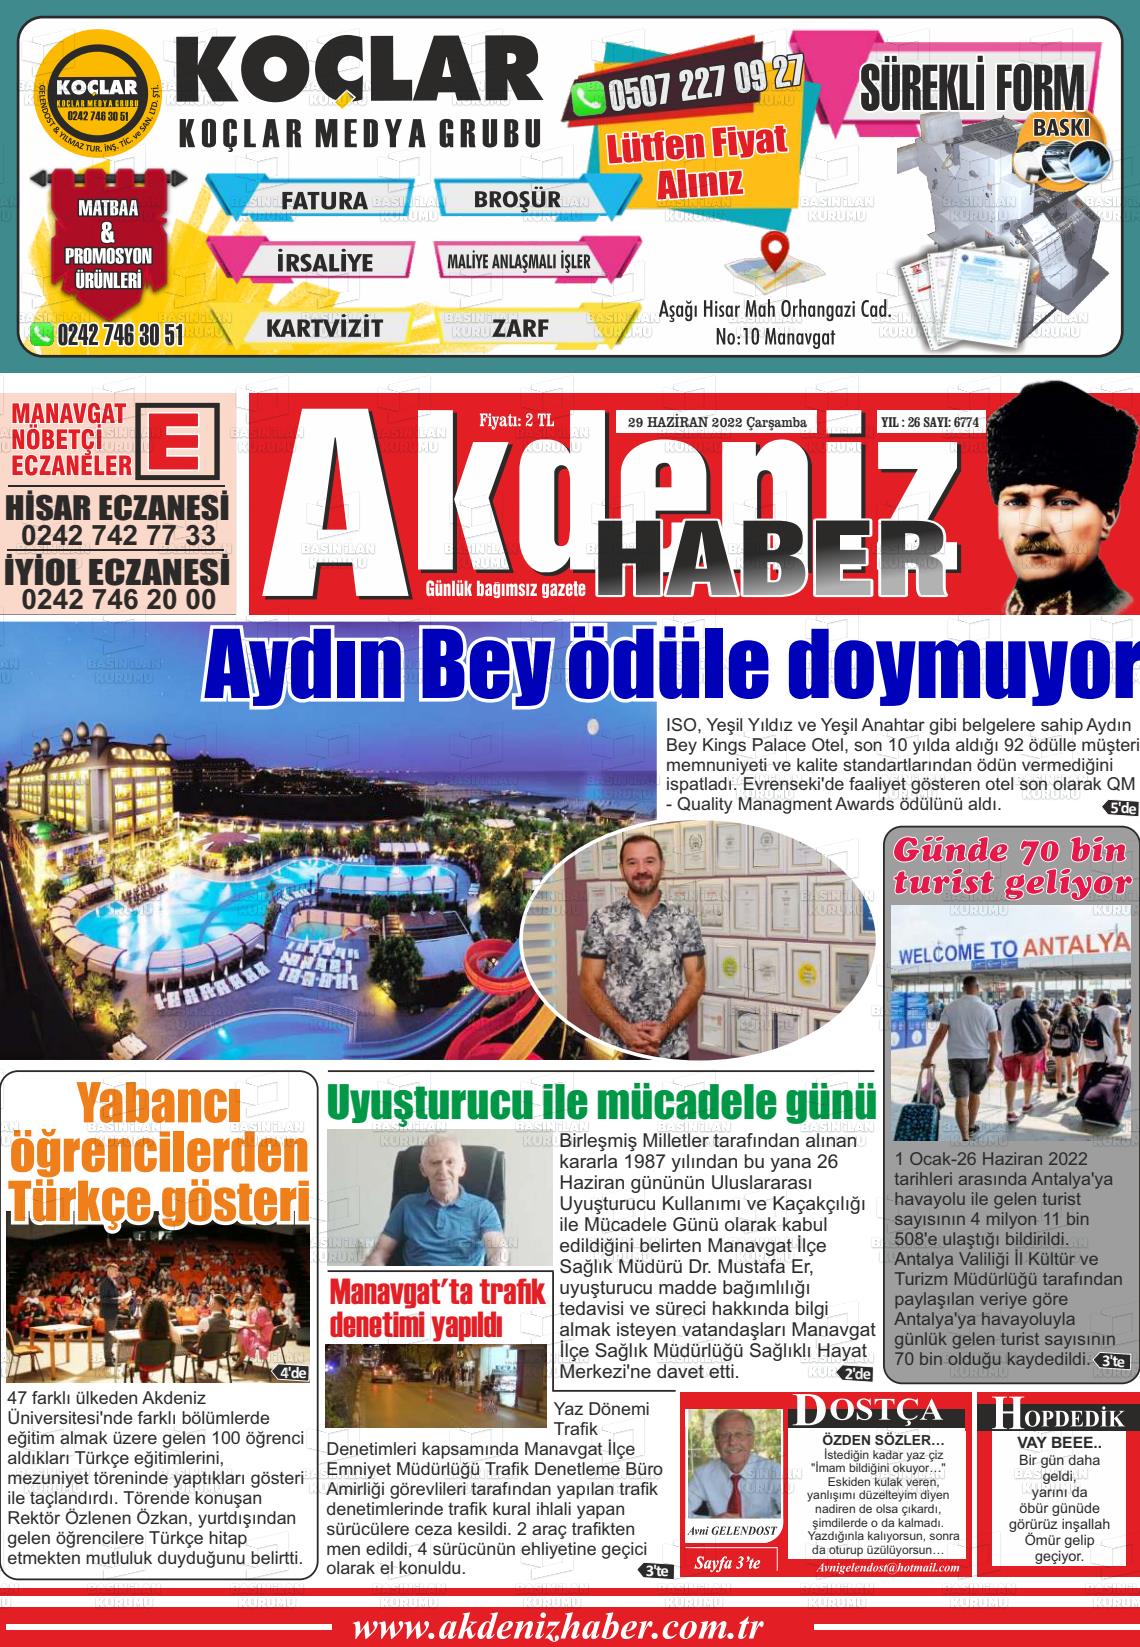 29 Haziran 2022 Akdeniz Haber Gazete Manşeti